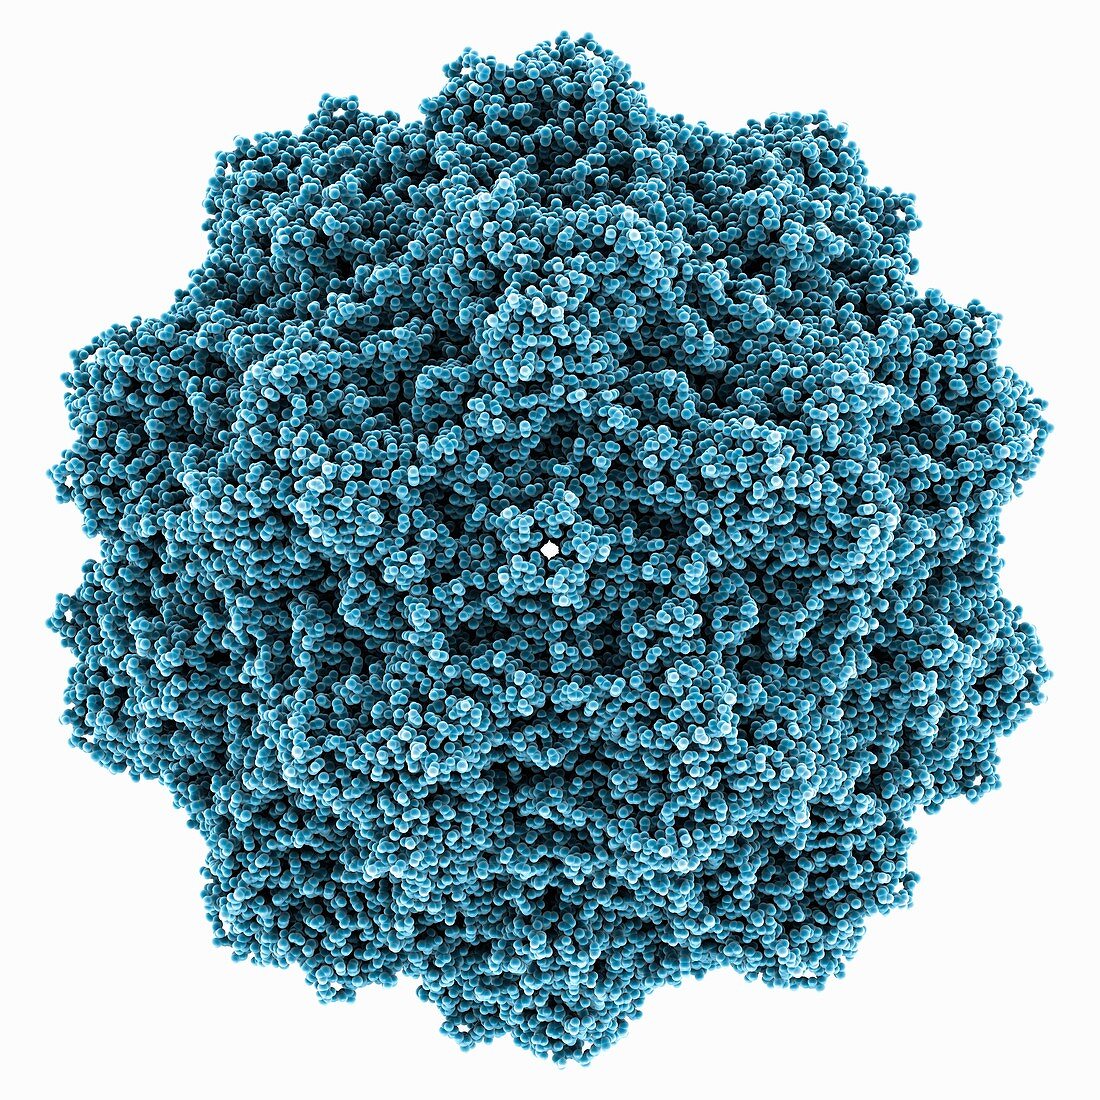 LuIII capsid protein, molecular model